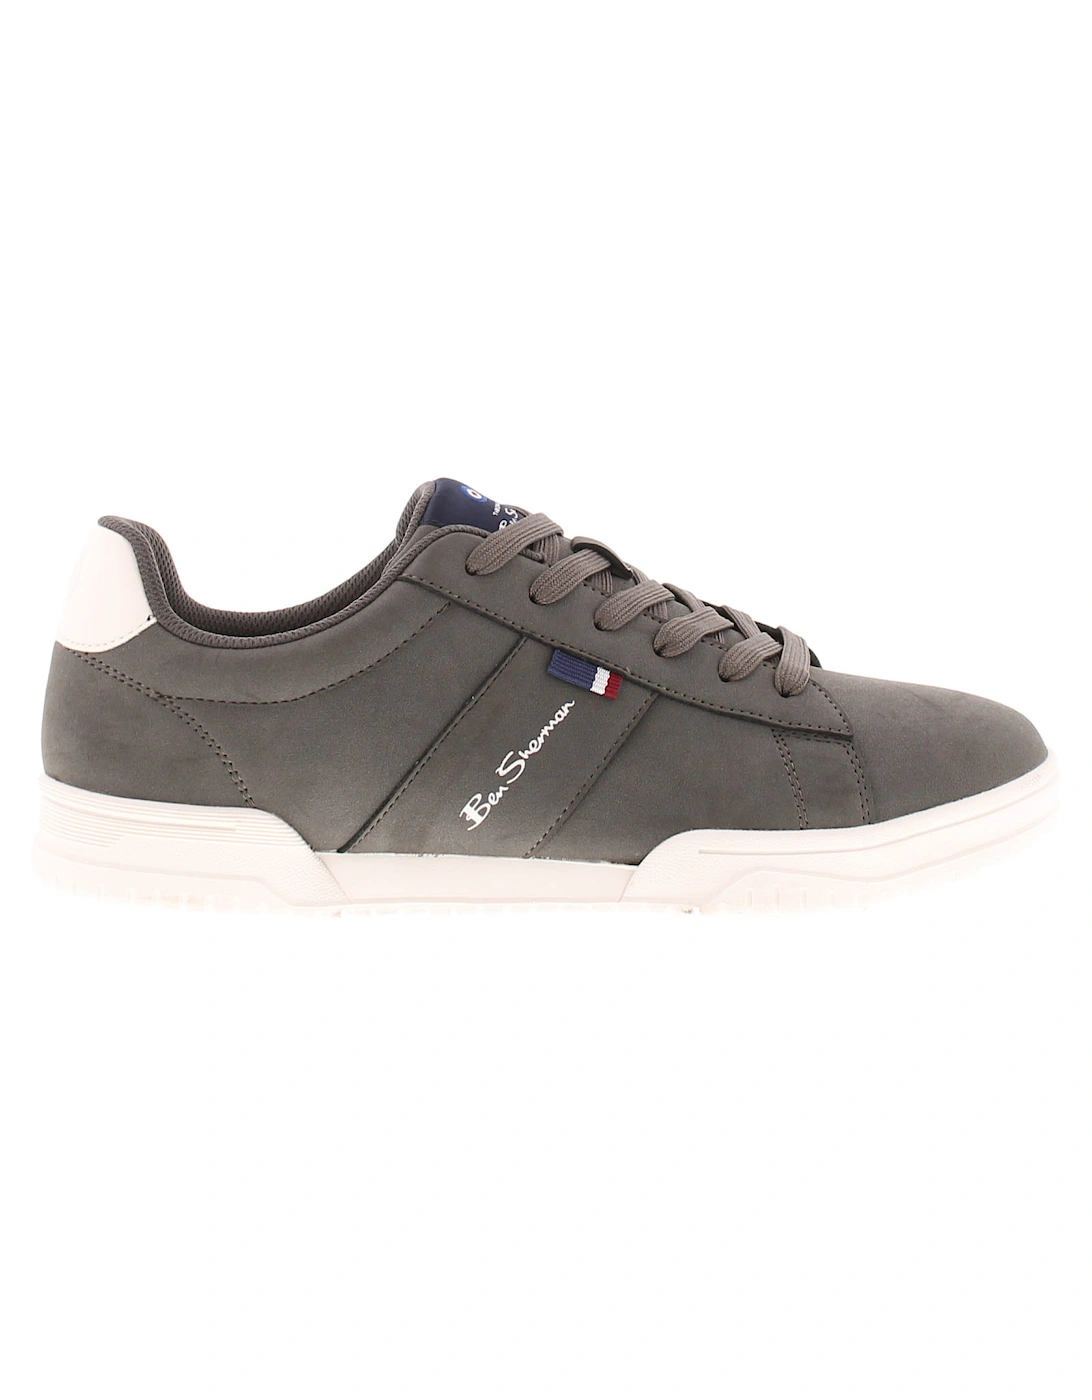 Mens Shoes Casual Delta grey UK Size